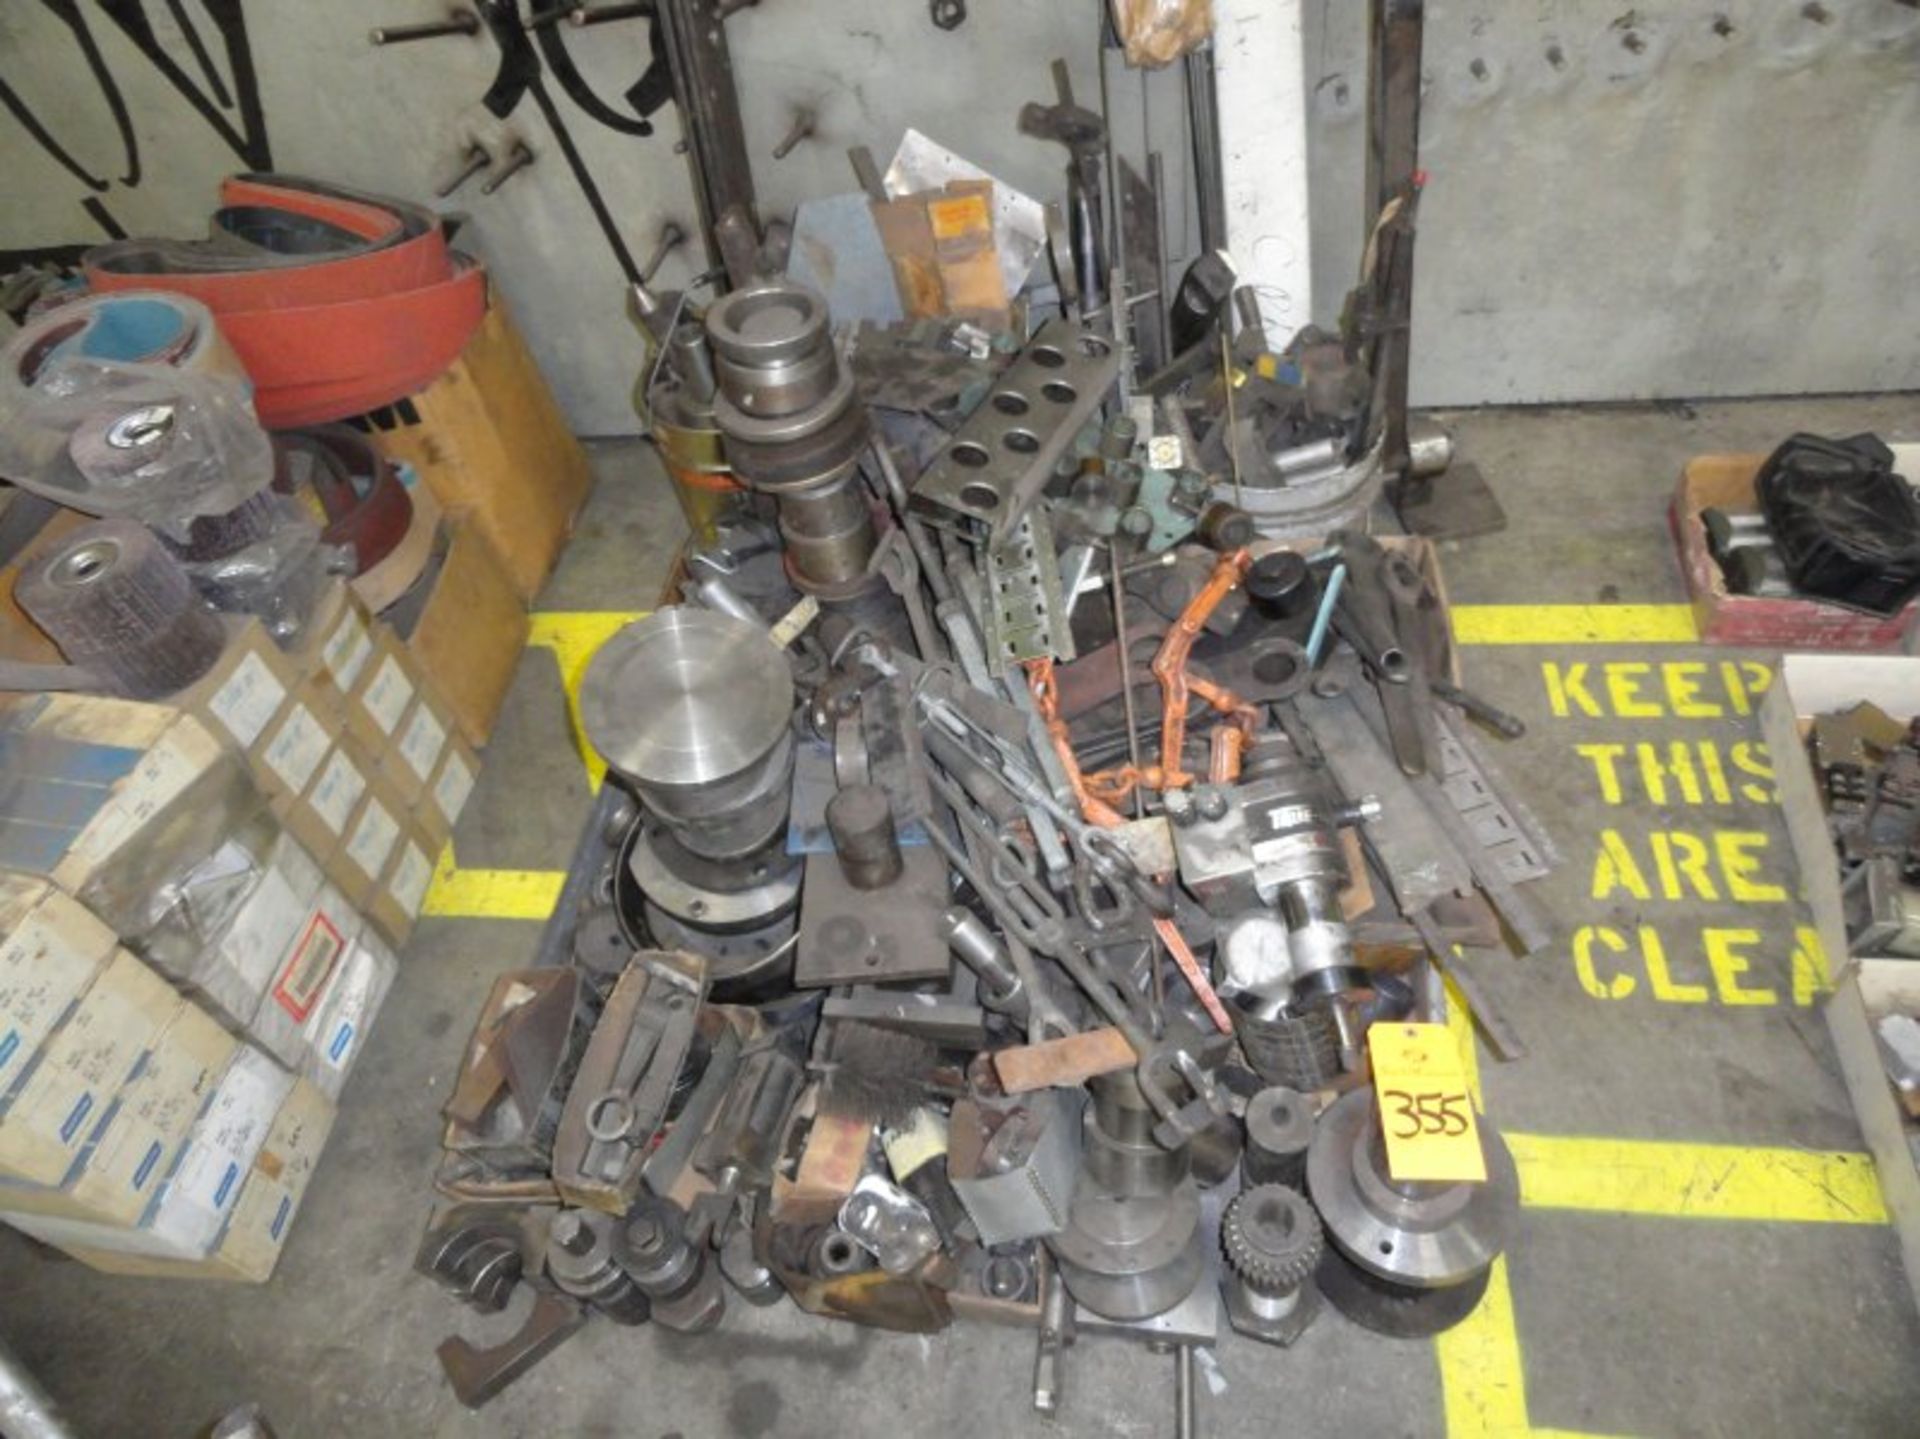 Assorted machine parts